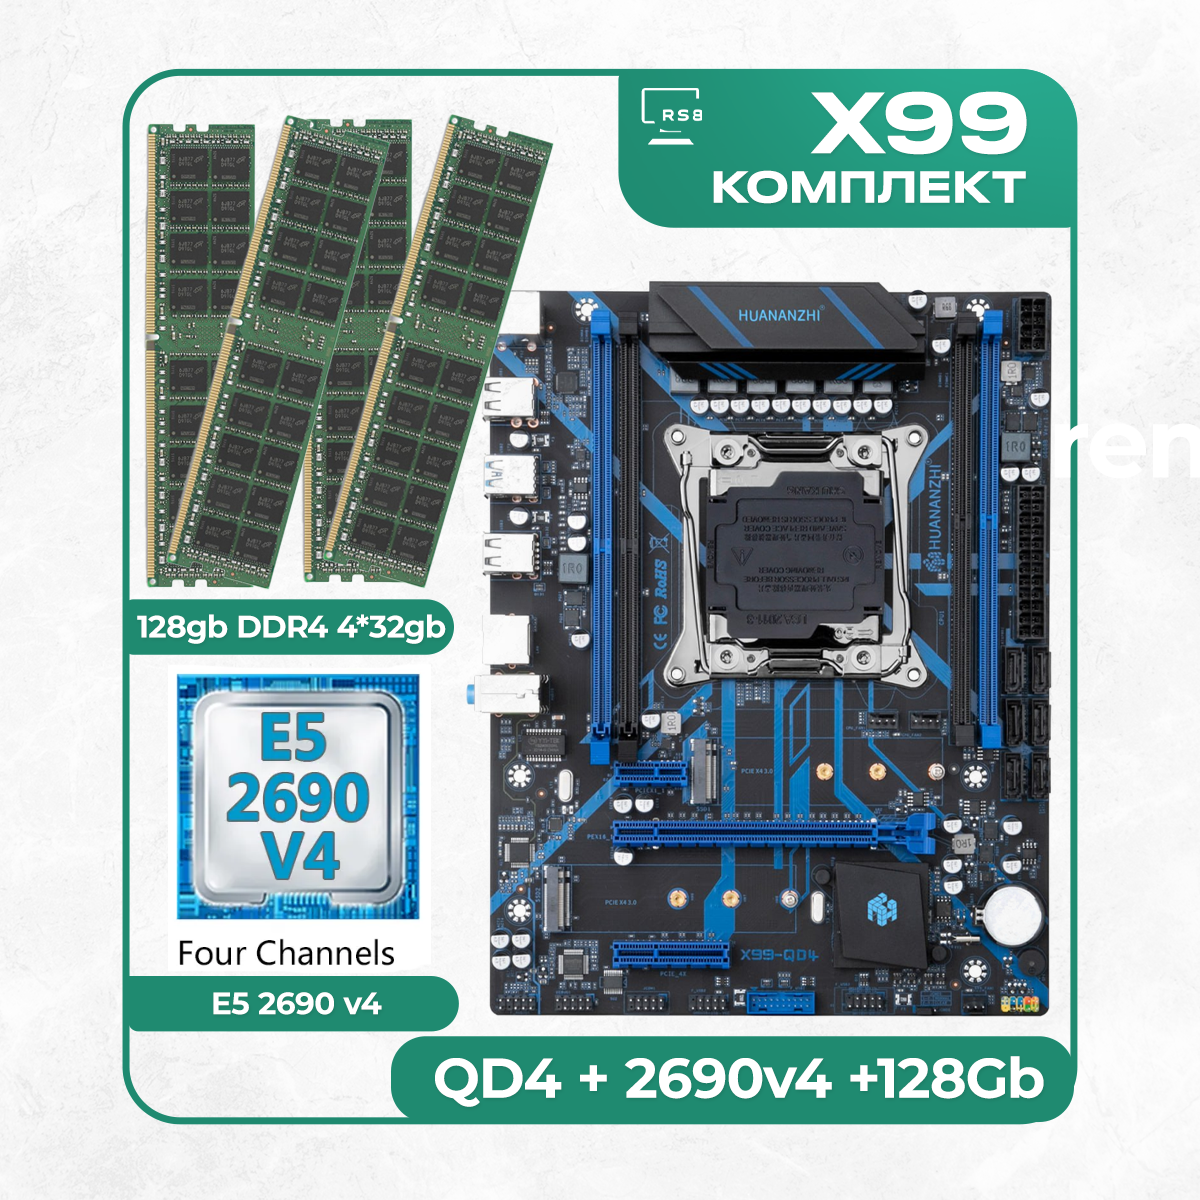 Комплект X99 2011v3: Huananzhi QD4 + Xeon E5 2690v4 + DDR4 128Гб ECC 4х3 - купить в Москве, цены на Мегамаркет | 600017232087